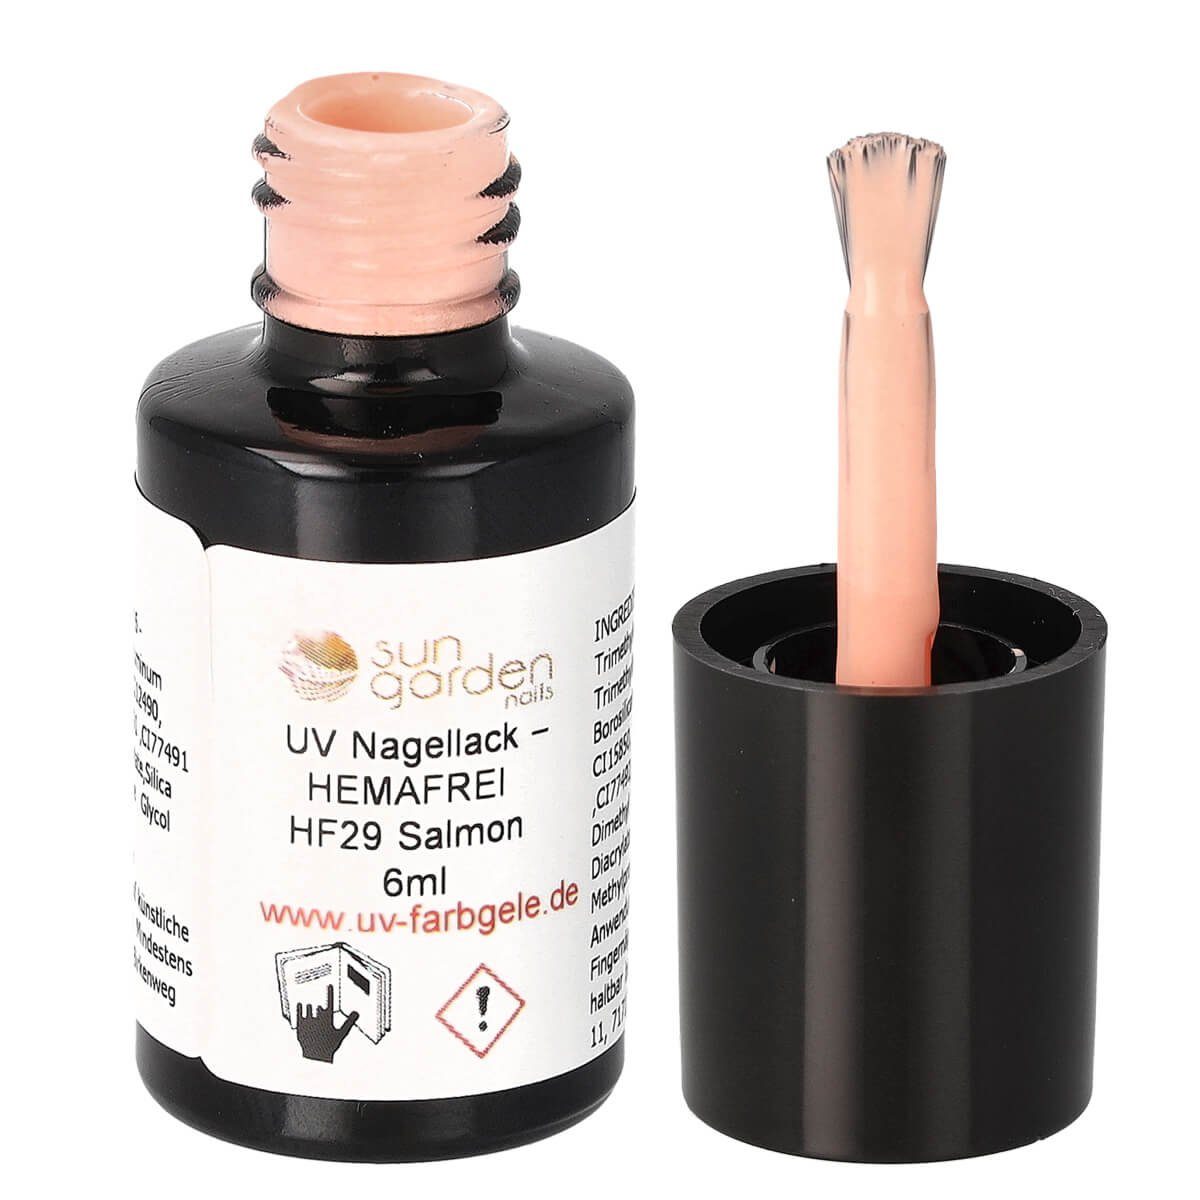 Salmon - Garden HF29 Nails UV – Nagellack 6ml HEMAFREI Sun Nagellack